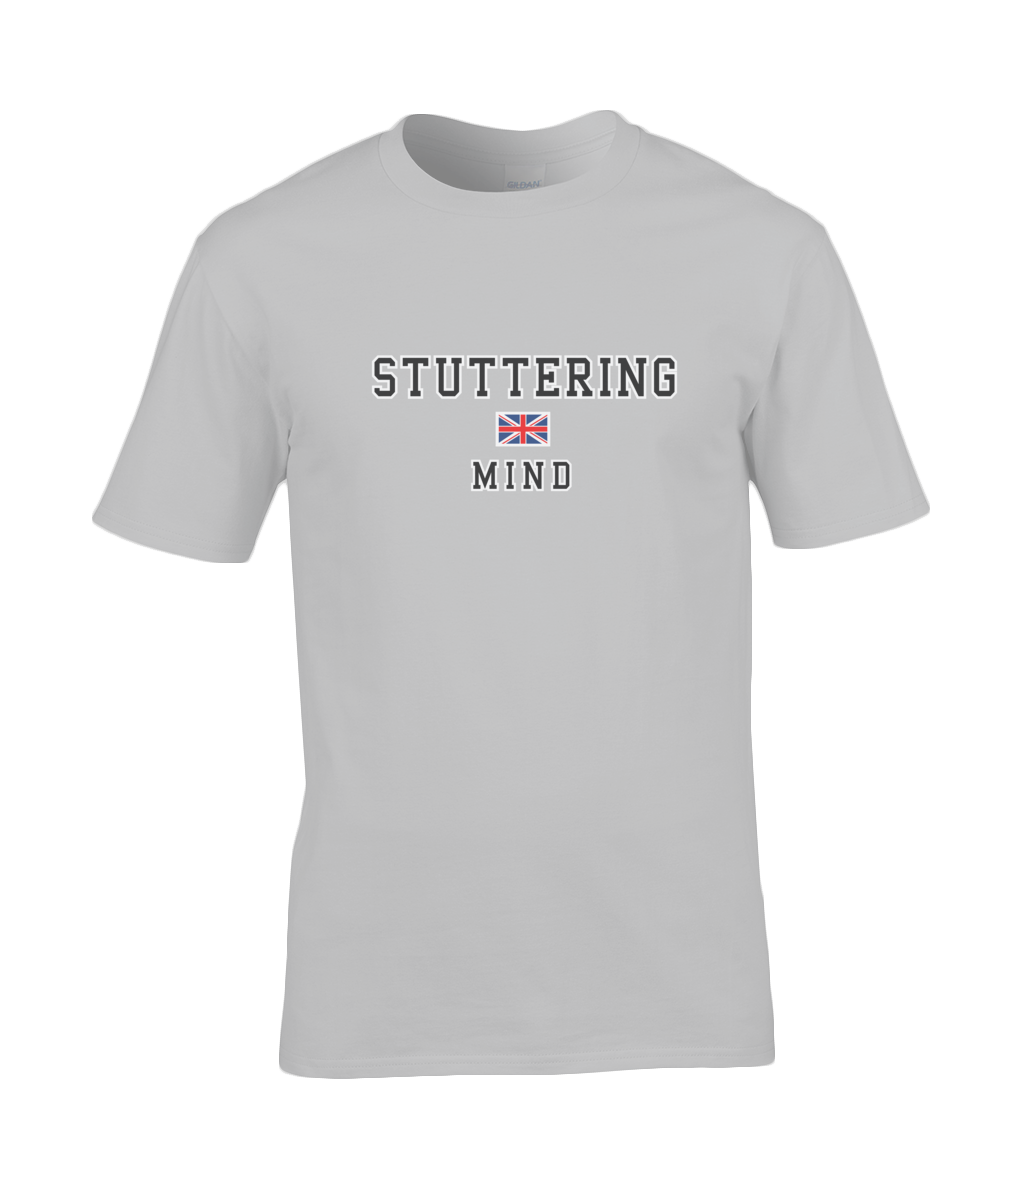 Download Gildan Premium Cotton T-Shirt UK Grey - Stuttering Mind